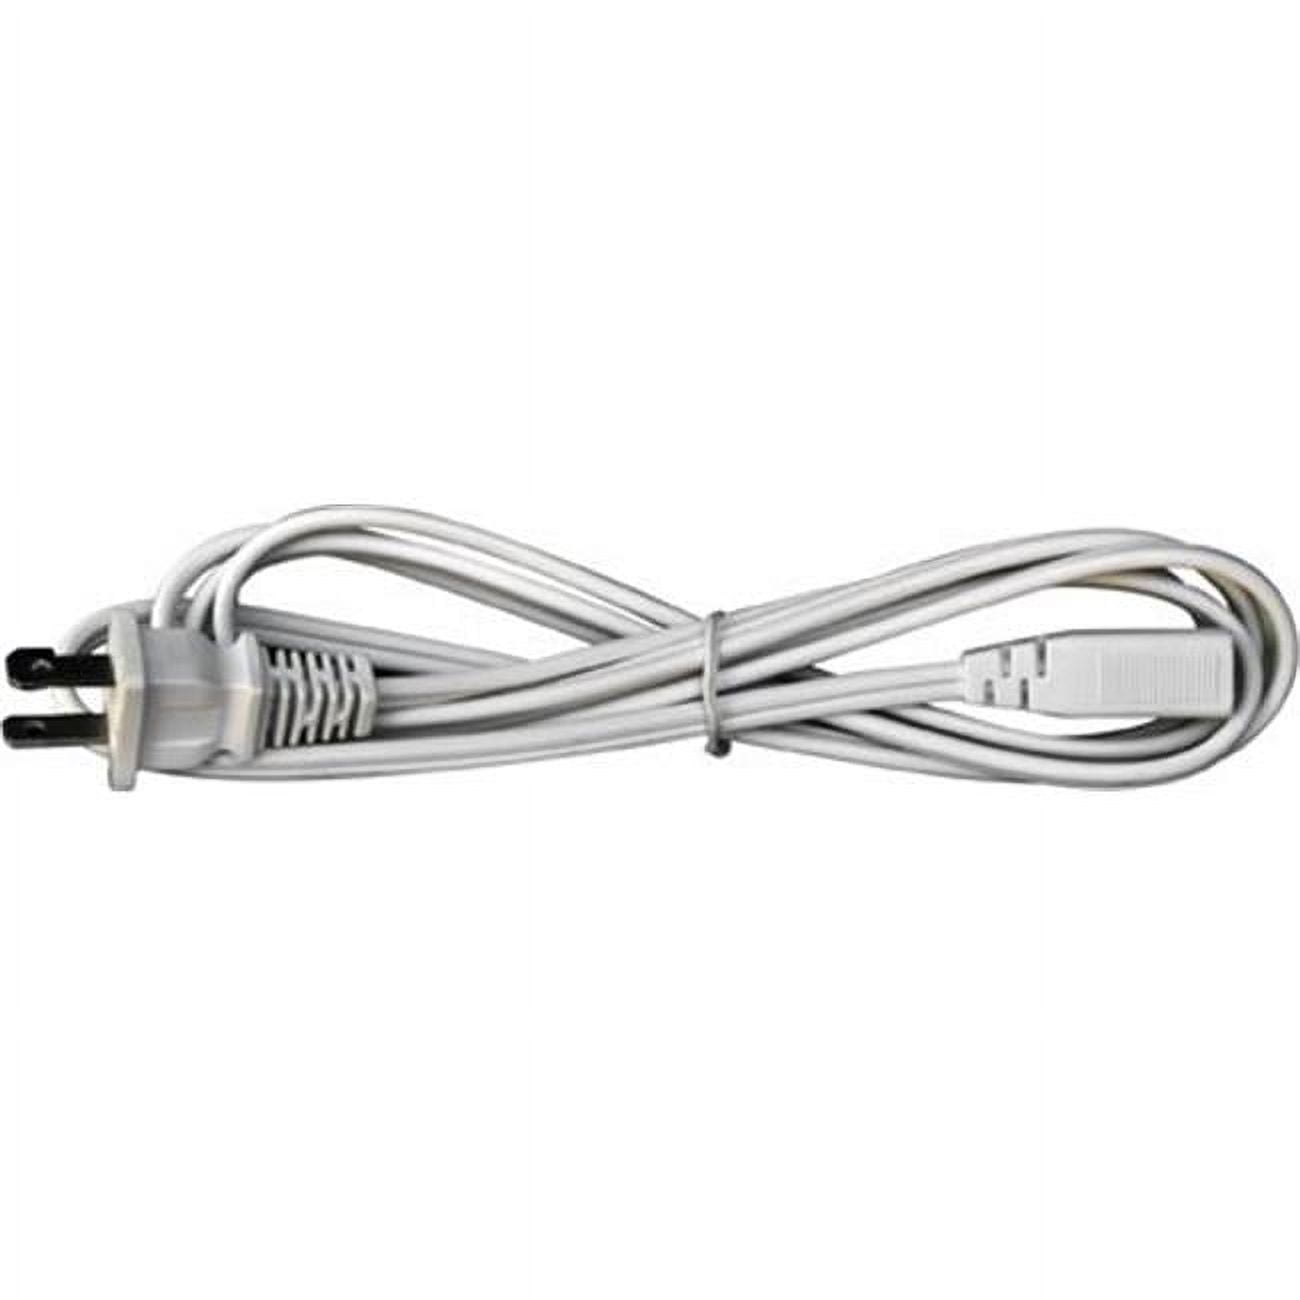 Duf-cord Interlocking Undercabinet Light Power Cord